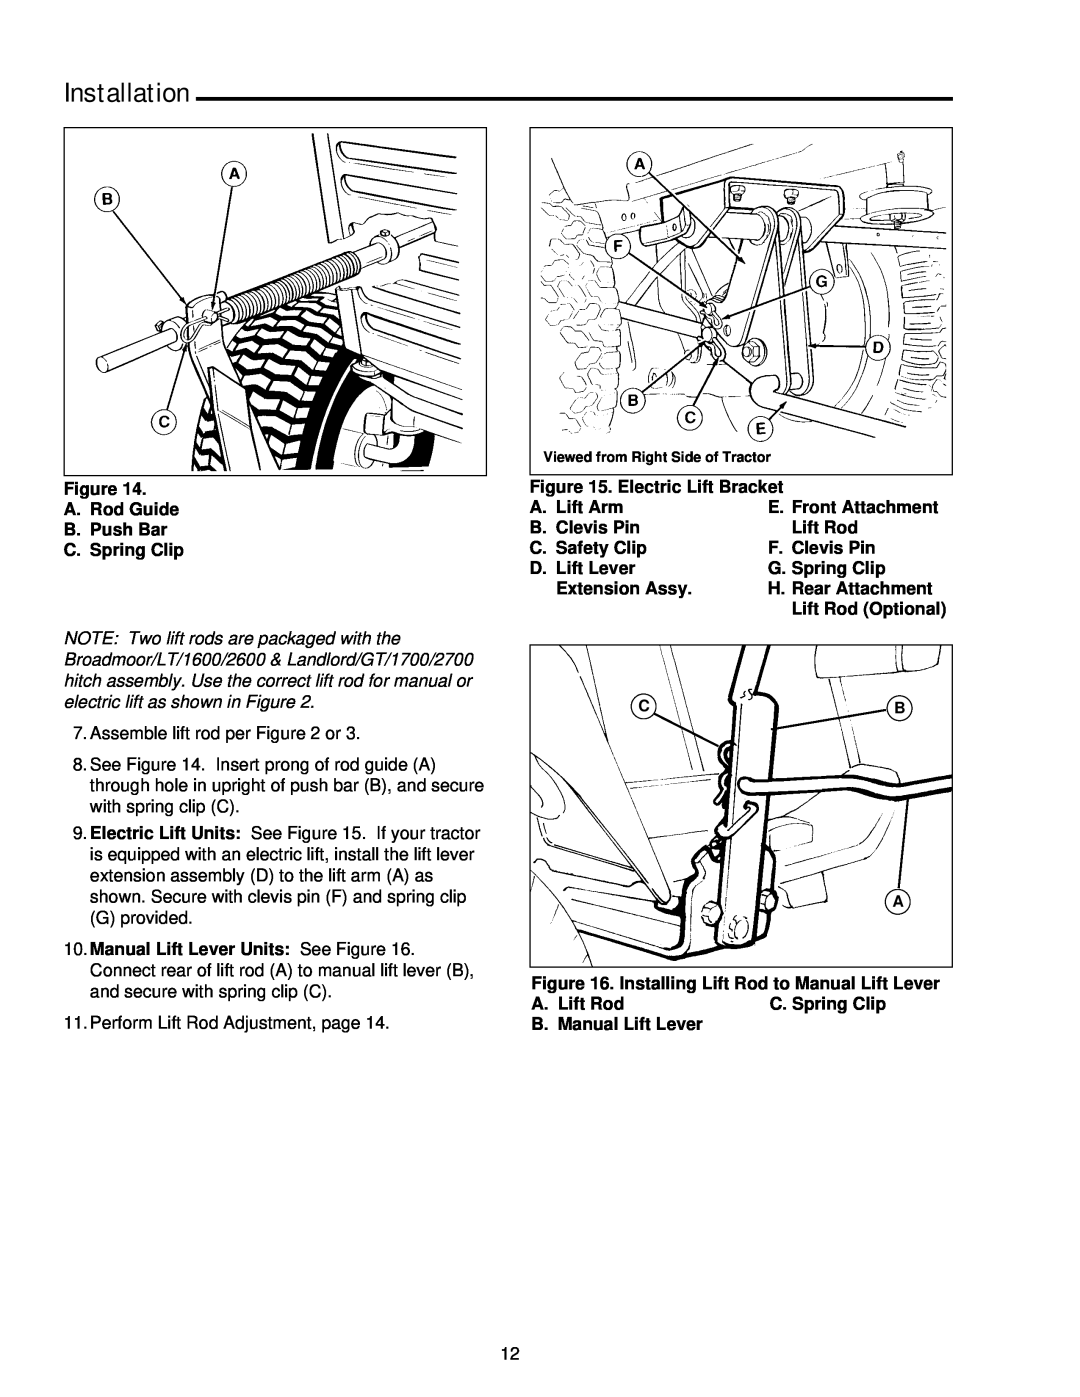 Simplicity 1691620 manual A. Rod Guide B. Push Bar C. Spring Clip, Electric Lift Bracket, A. Lift Arm, E. Front Attachment 